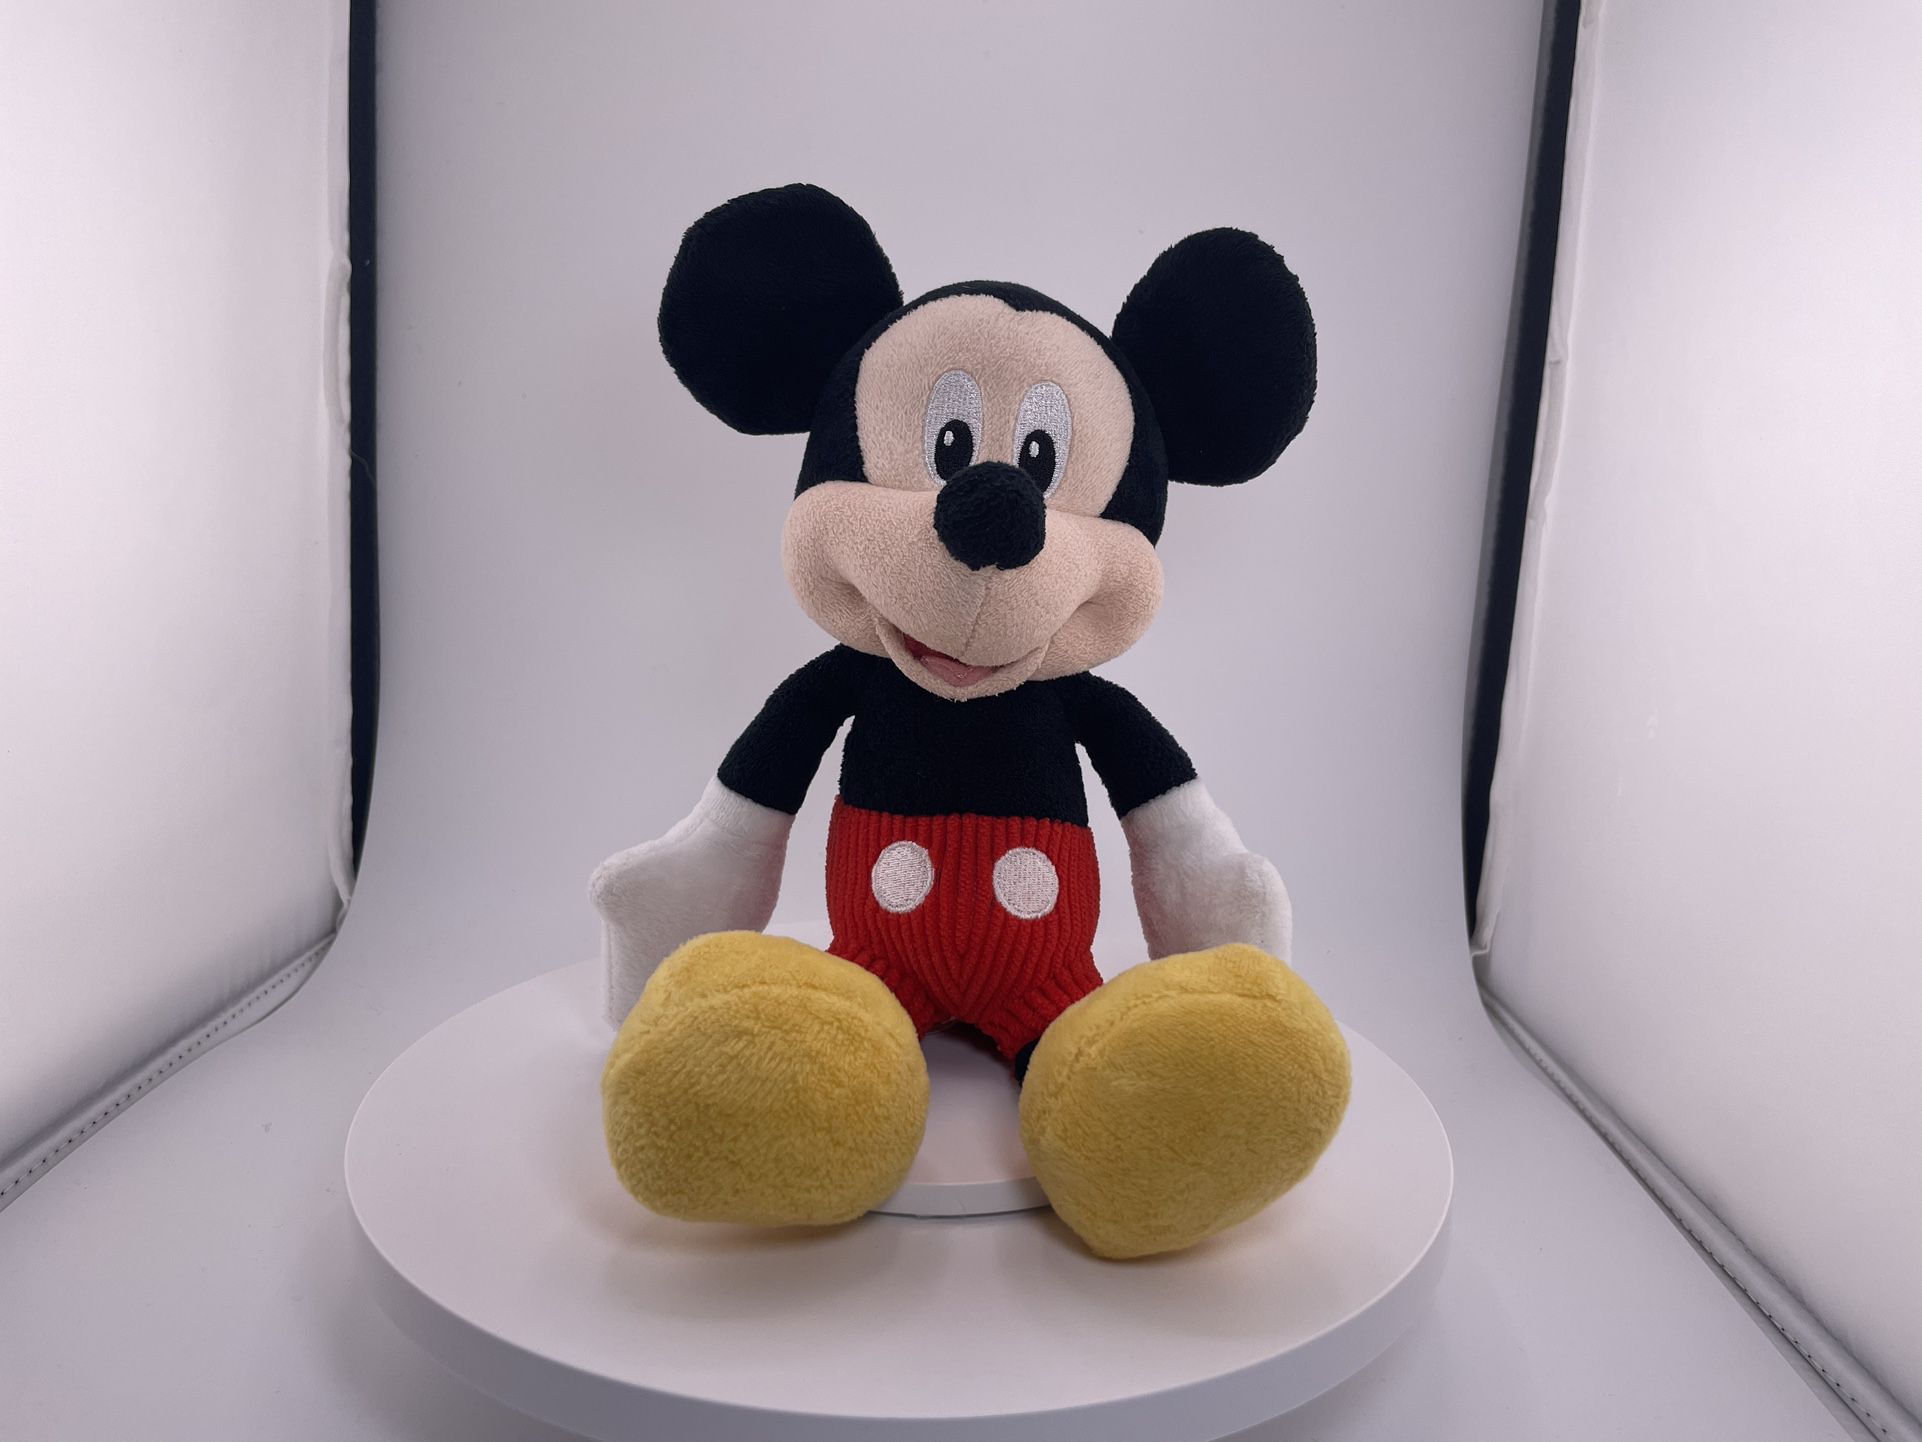 Mickey Mouse stuffed animal